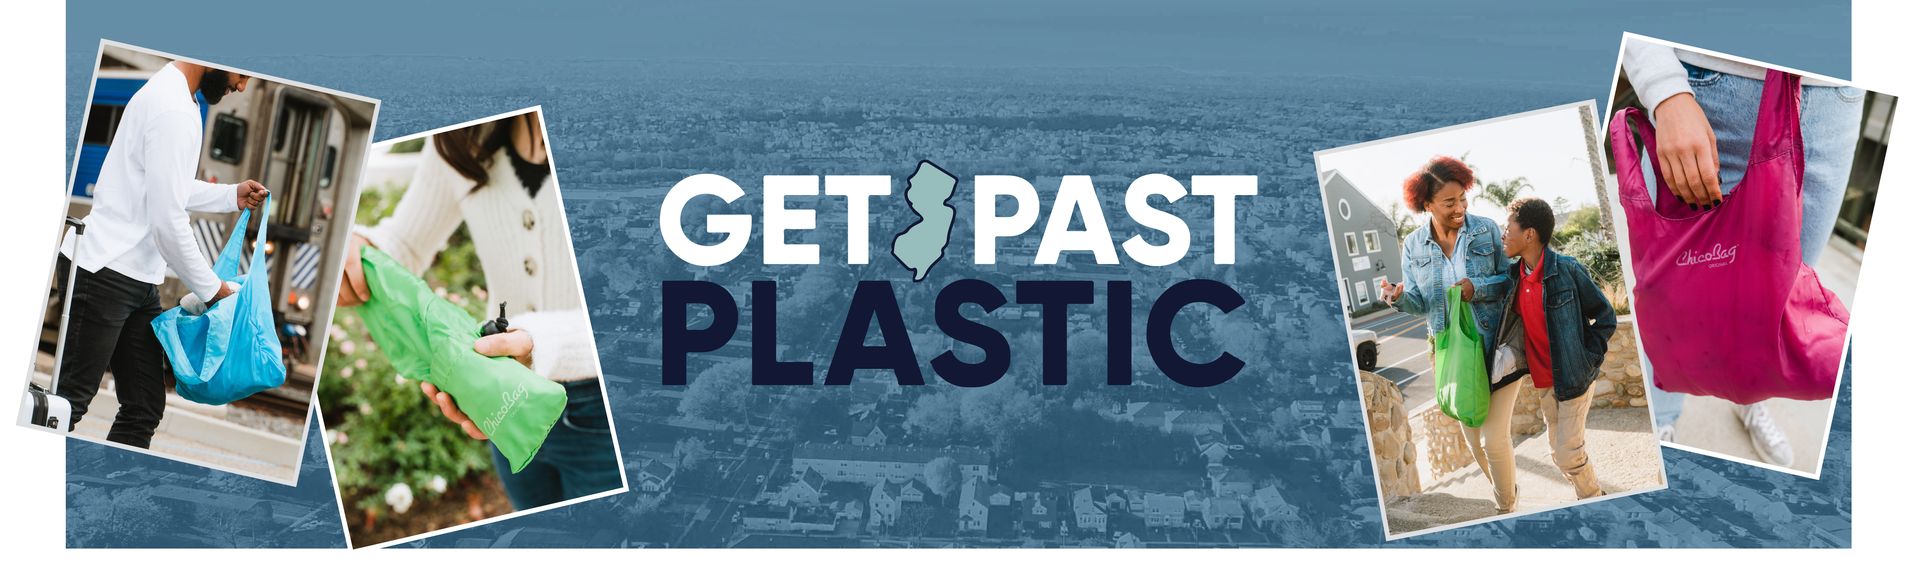 New Jersey plastic ban